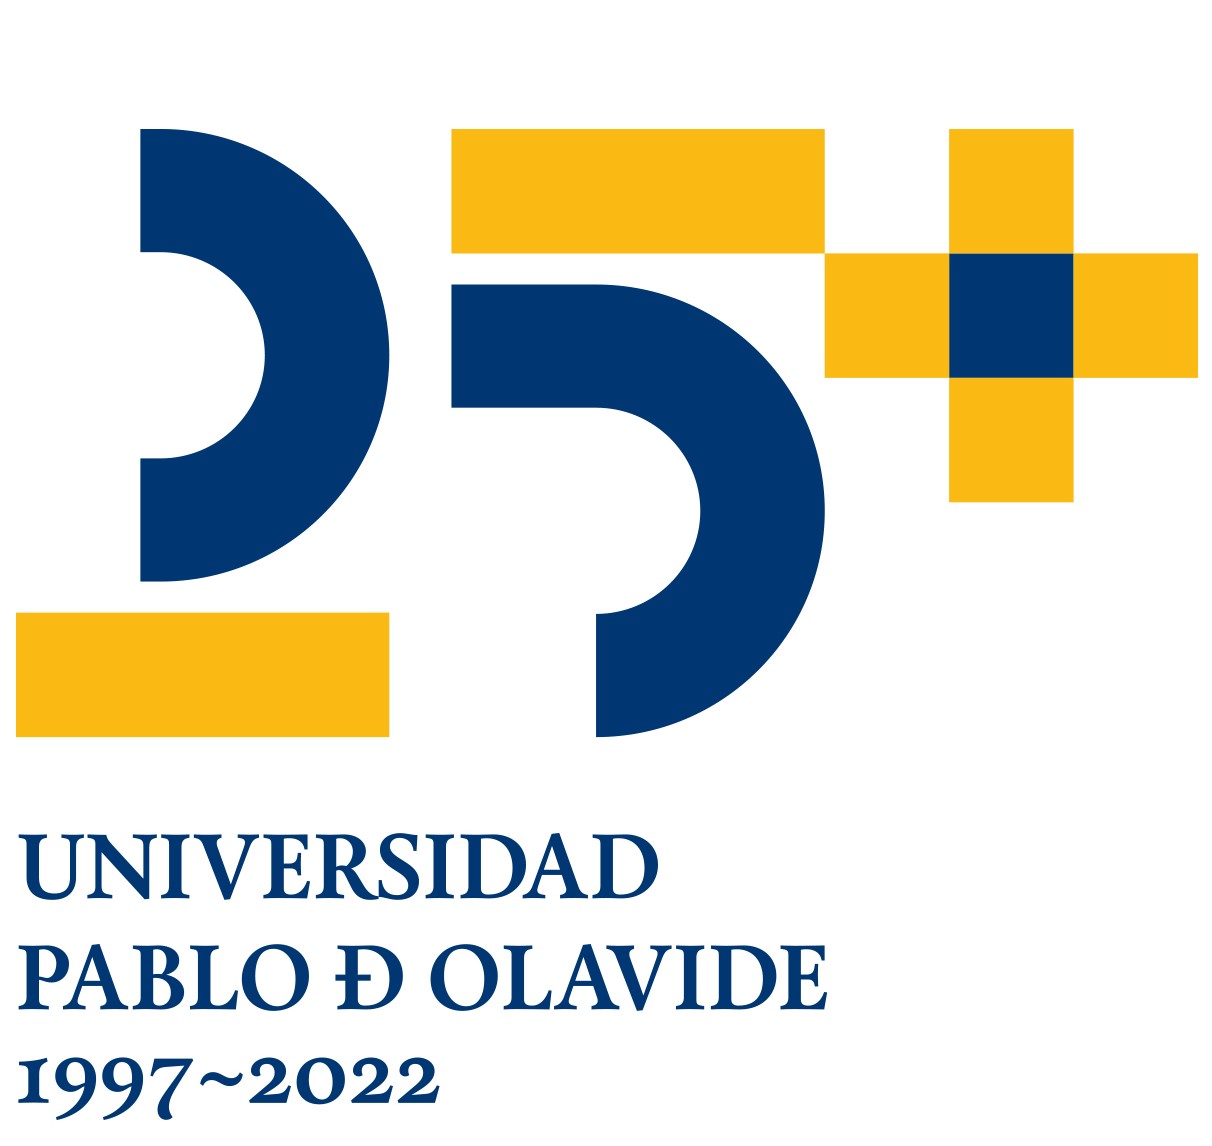 Pablo de Olavide University Faculty of Business